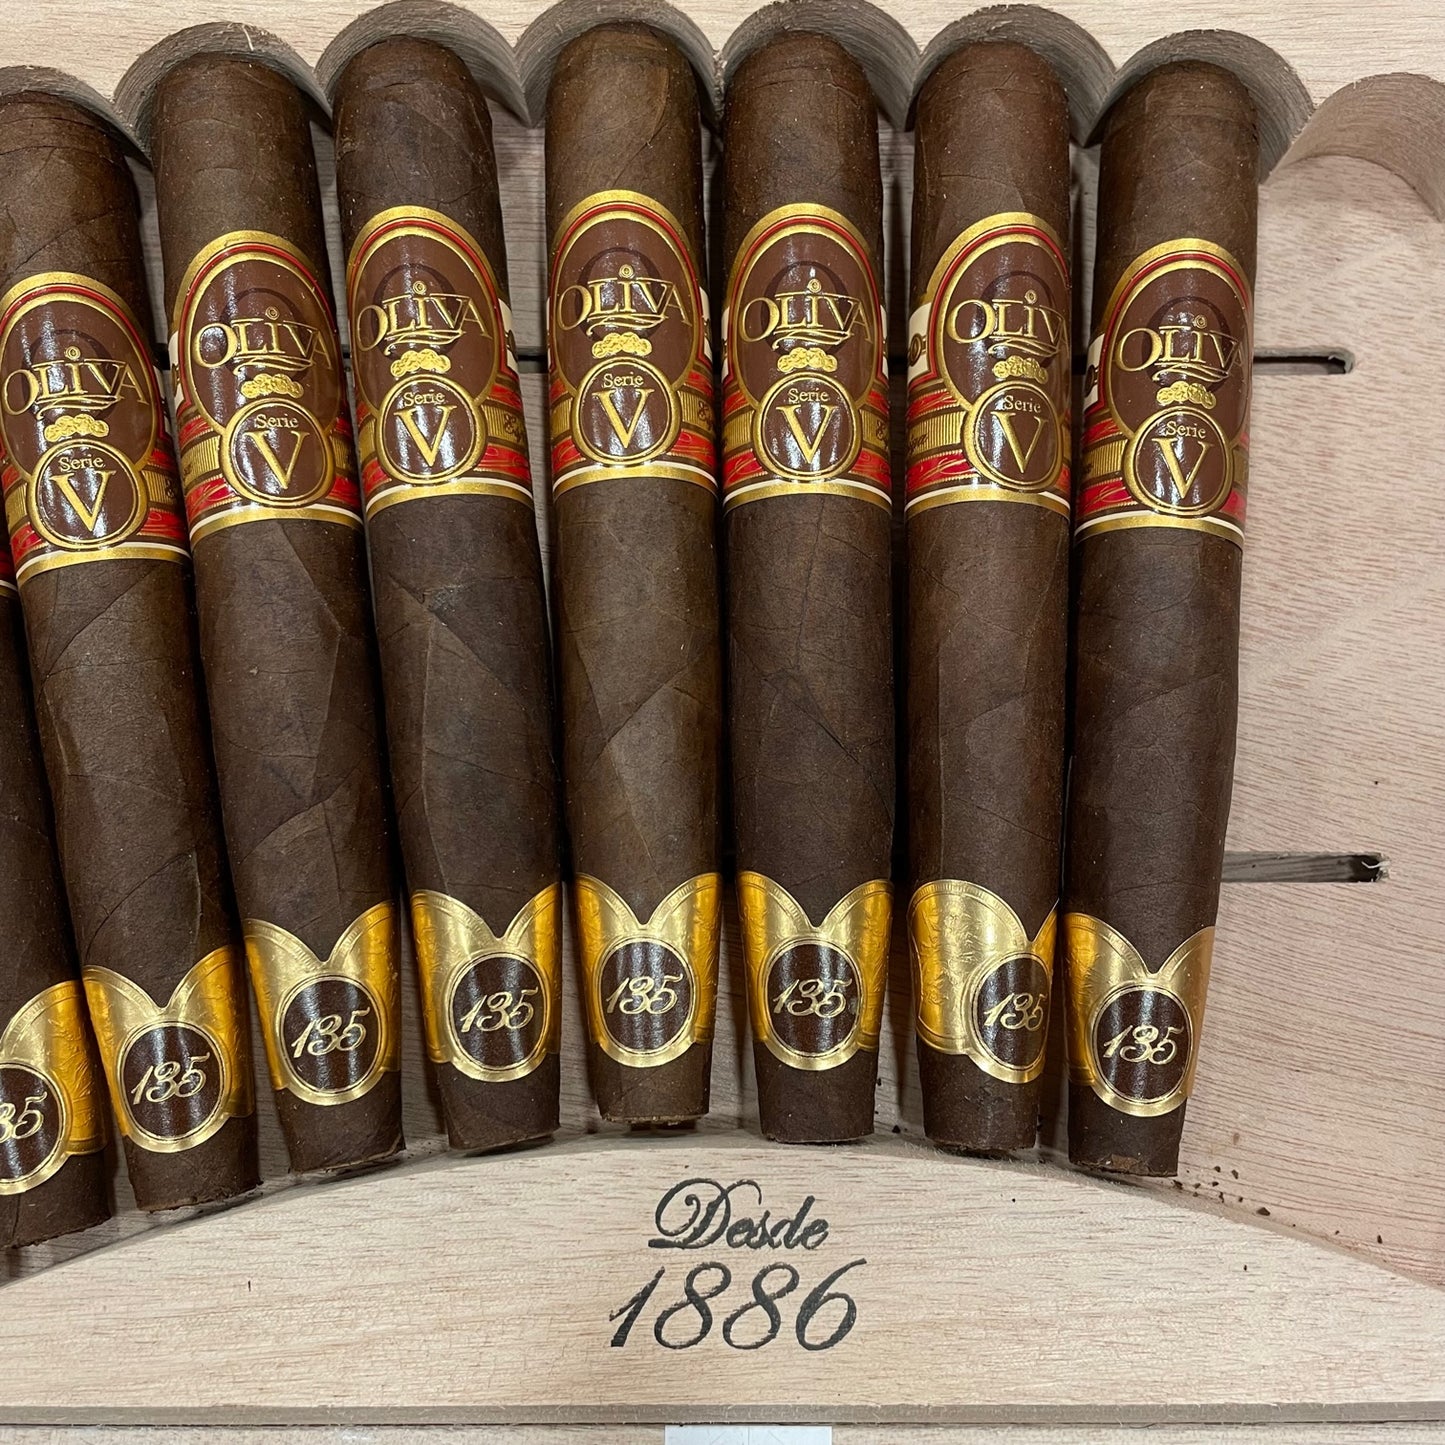 Oliva 135 Anniversary serie V Edition Real